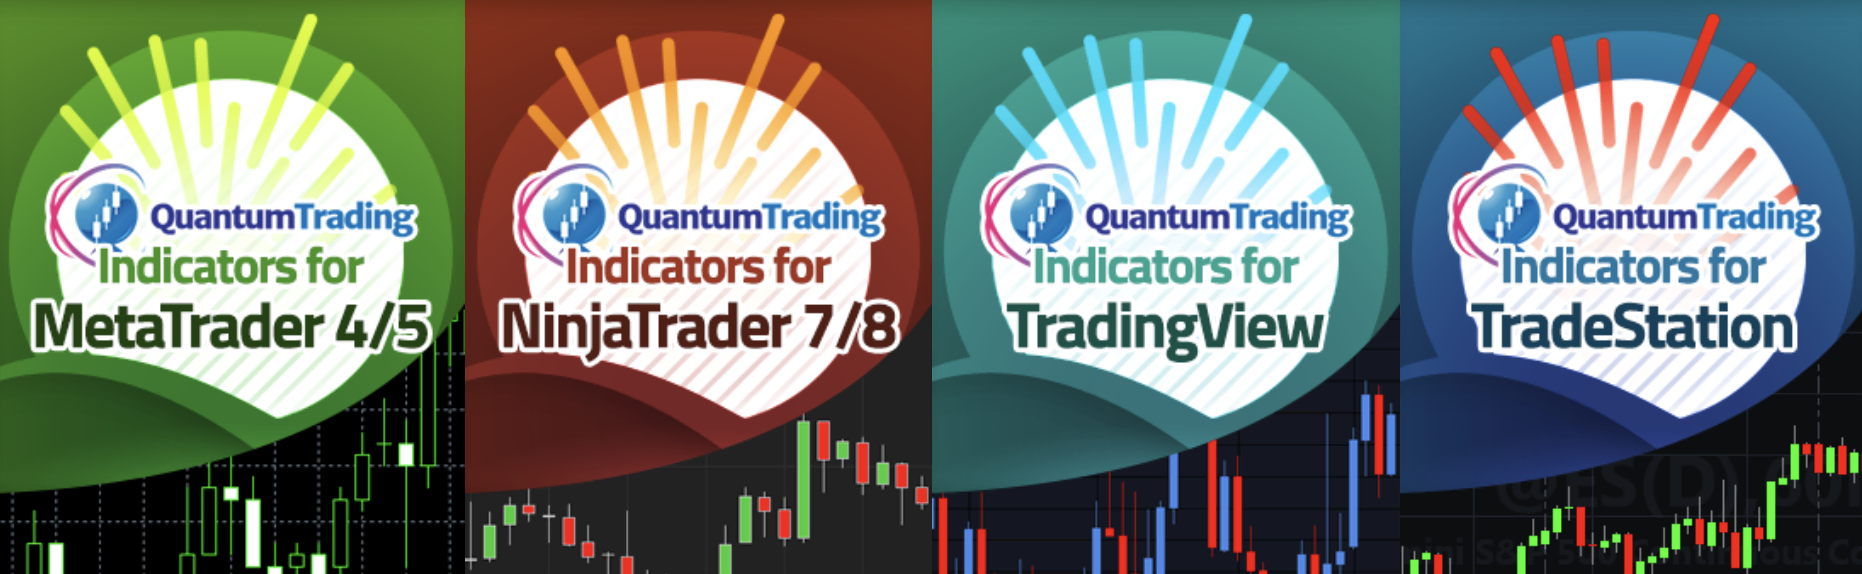 Indikator yang tersedia pada Quantum Trading